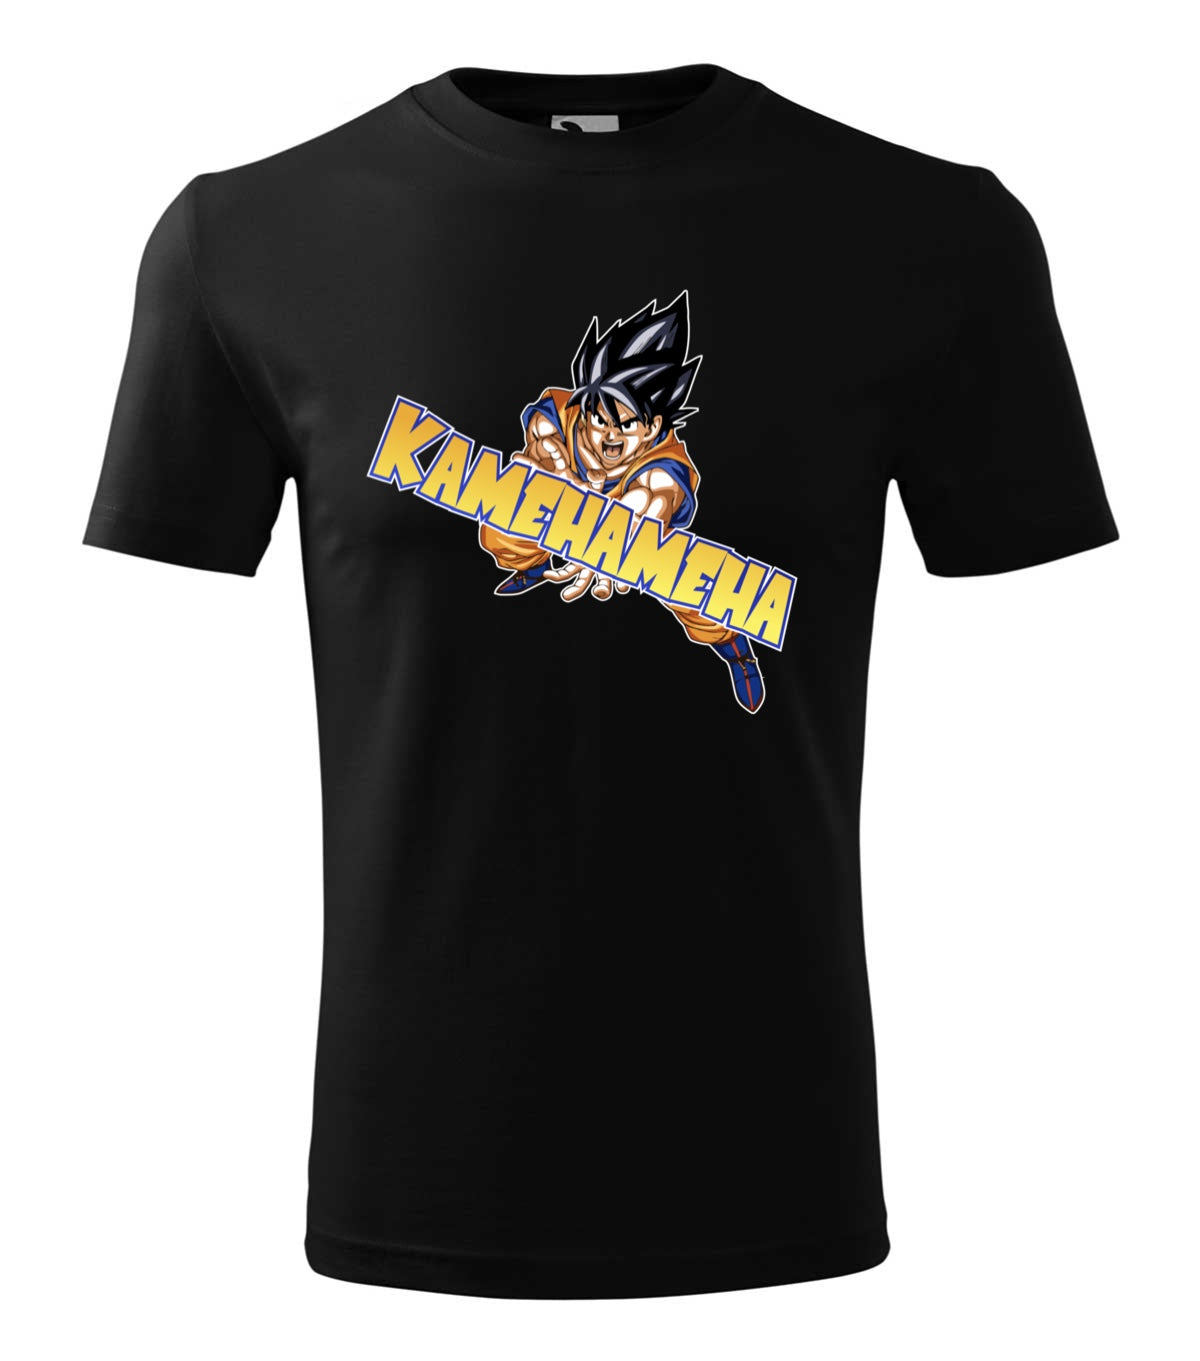 Kamehameha férfi technikai póló